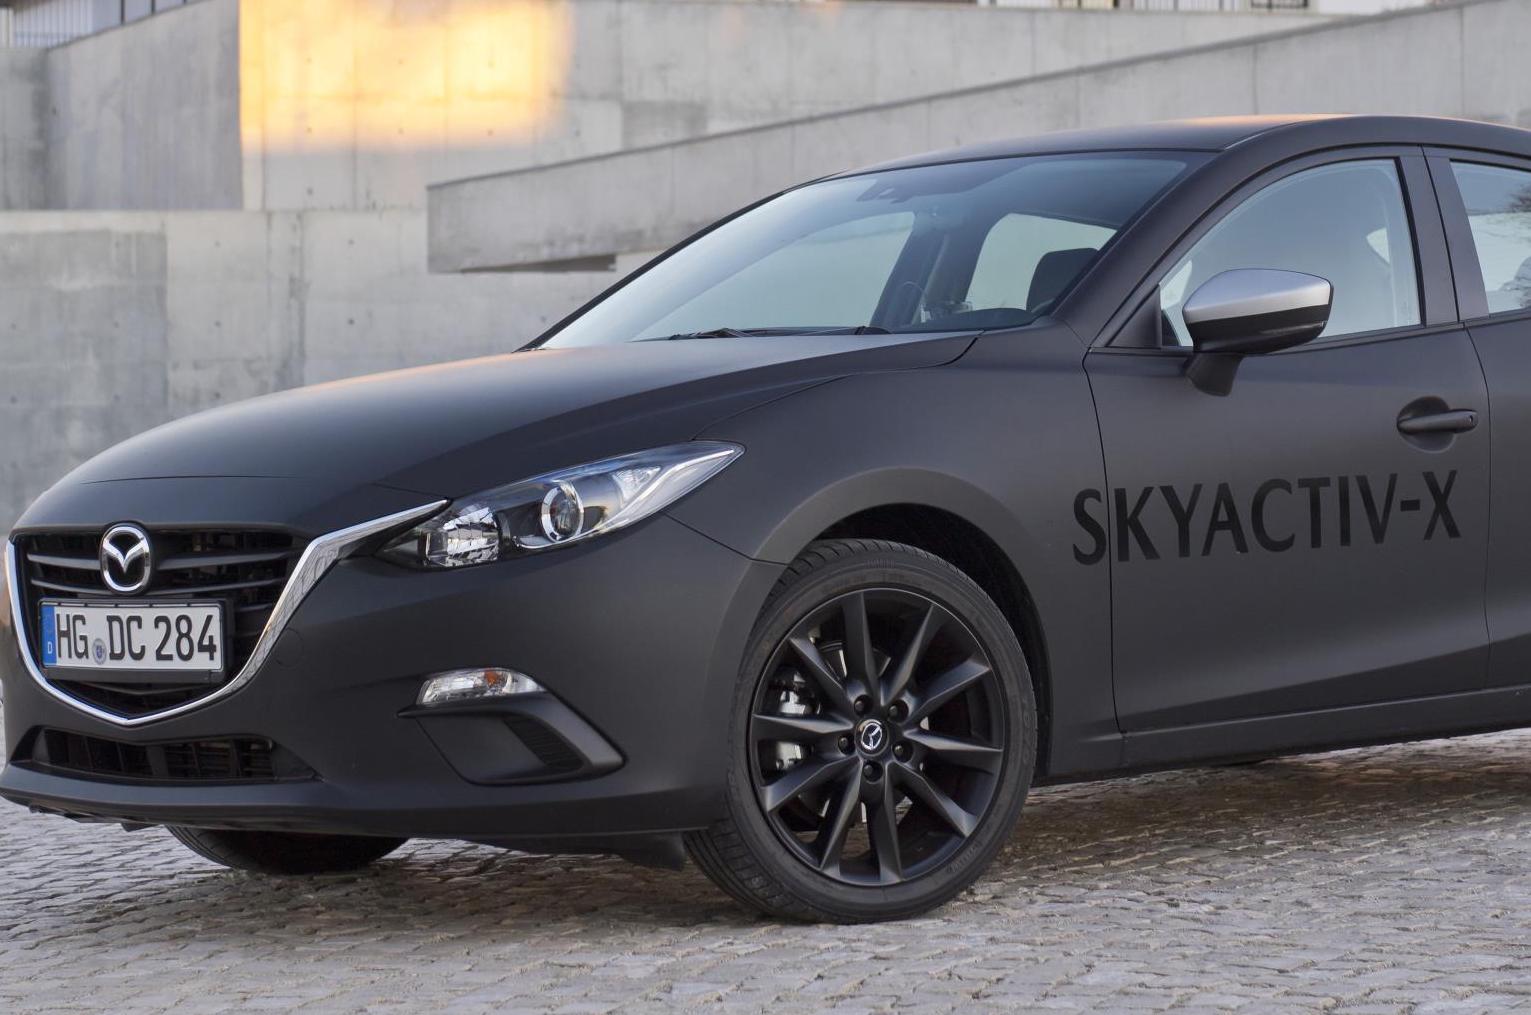 Mazda SkyActiv-X engine to run 2-3 times leaner than regular engine